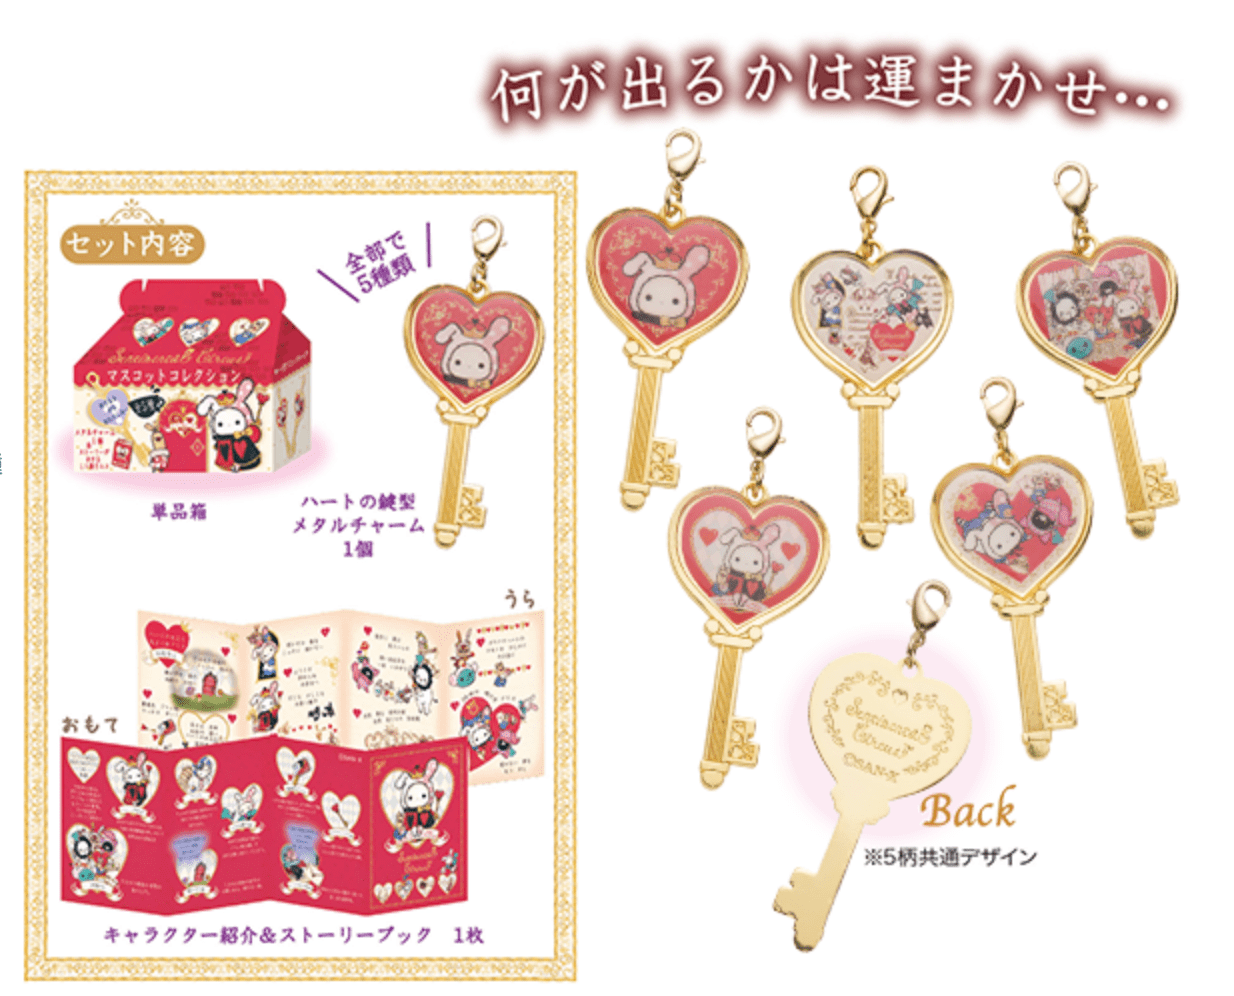 Kawaii Import San-X Sentimental Circus Queen of Hearts 2" Key Mascots Blind Box Kawaii Gifts 4974413657570